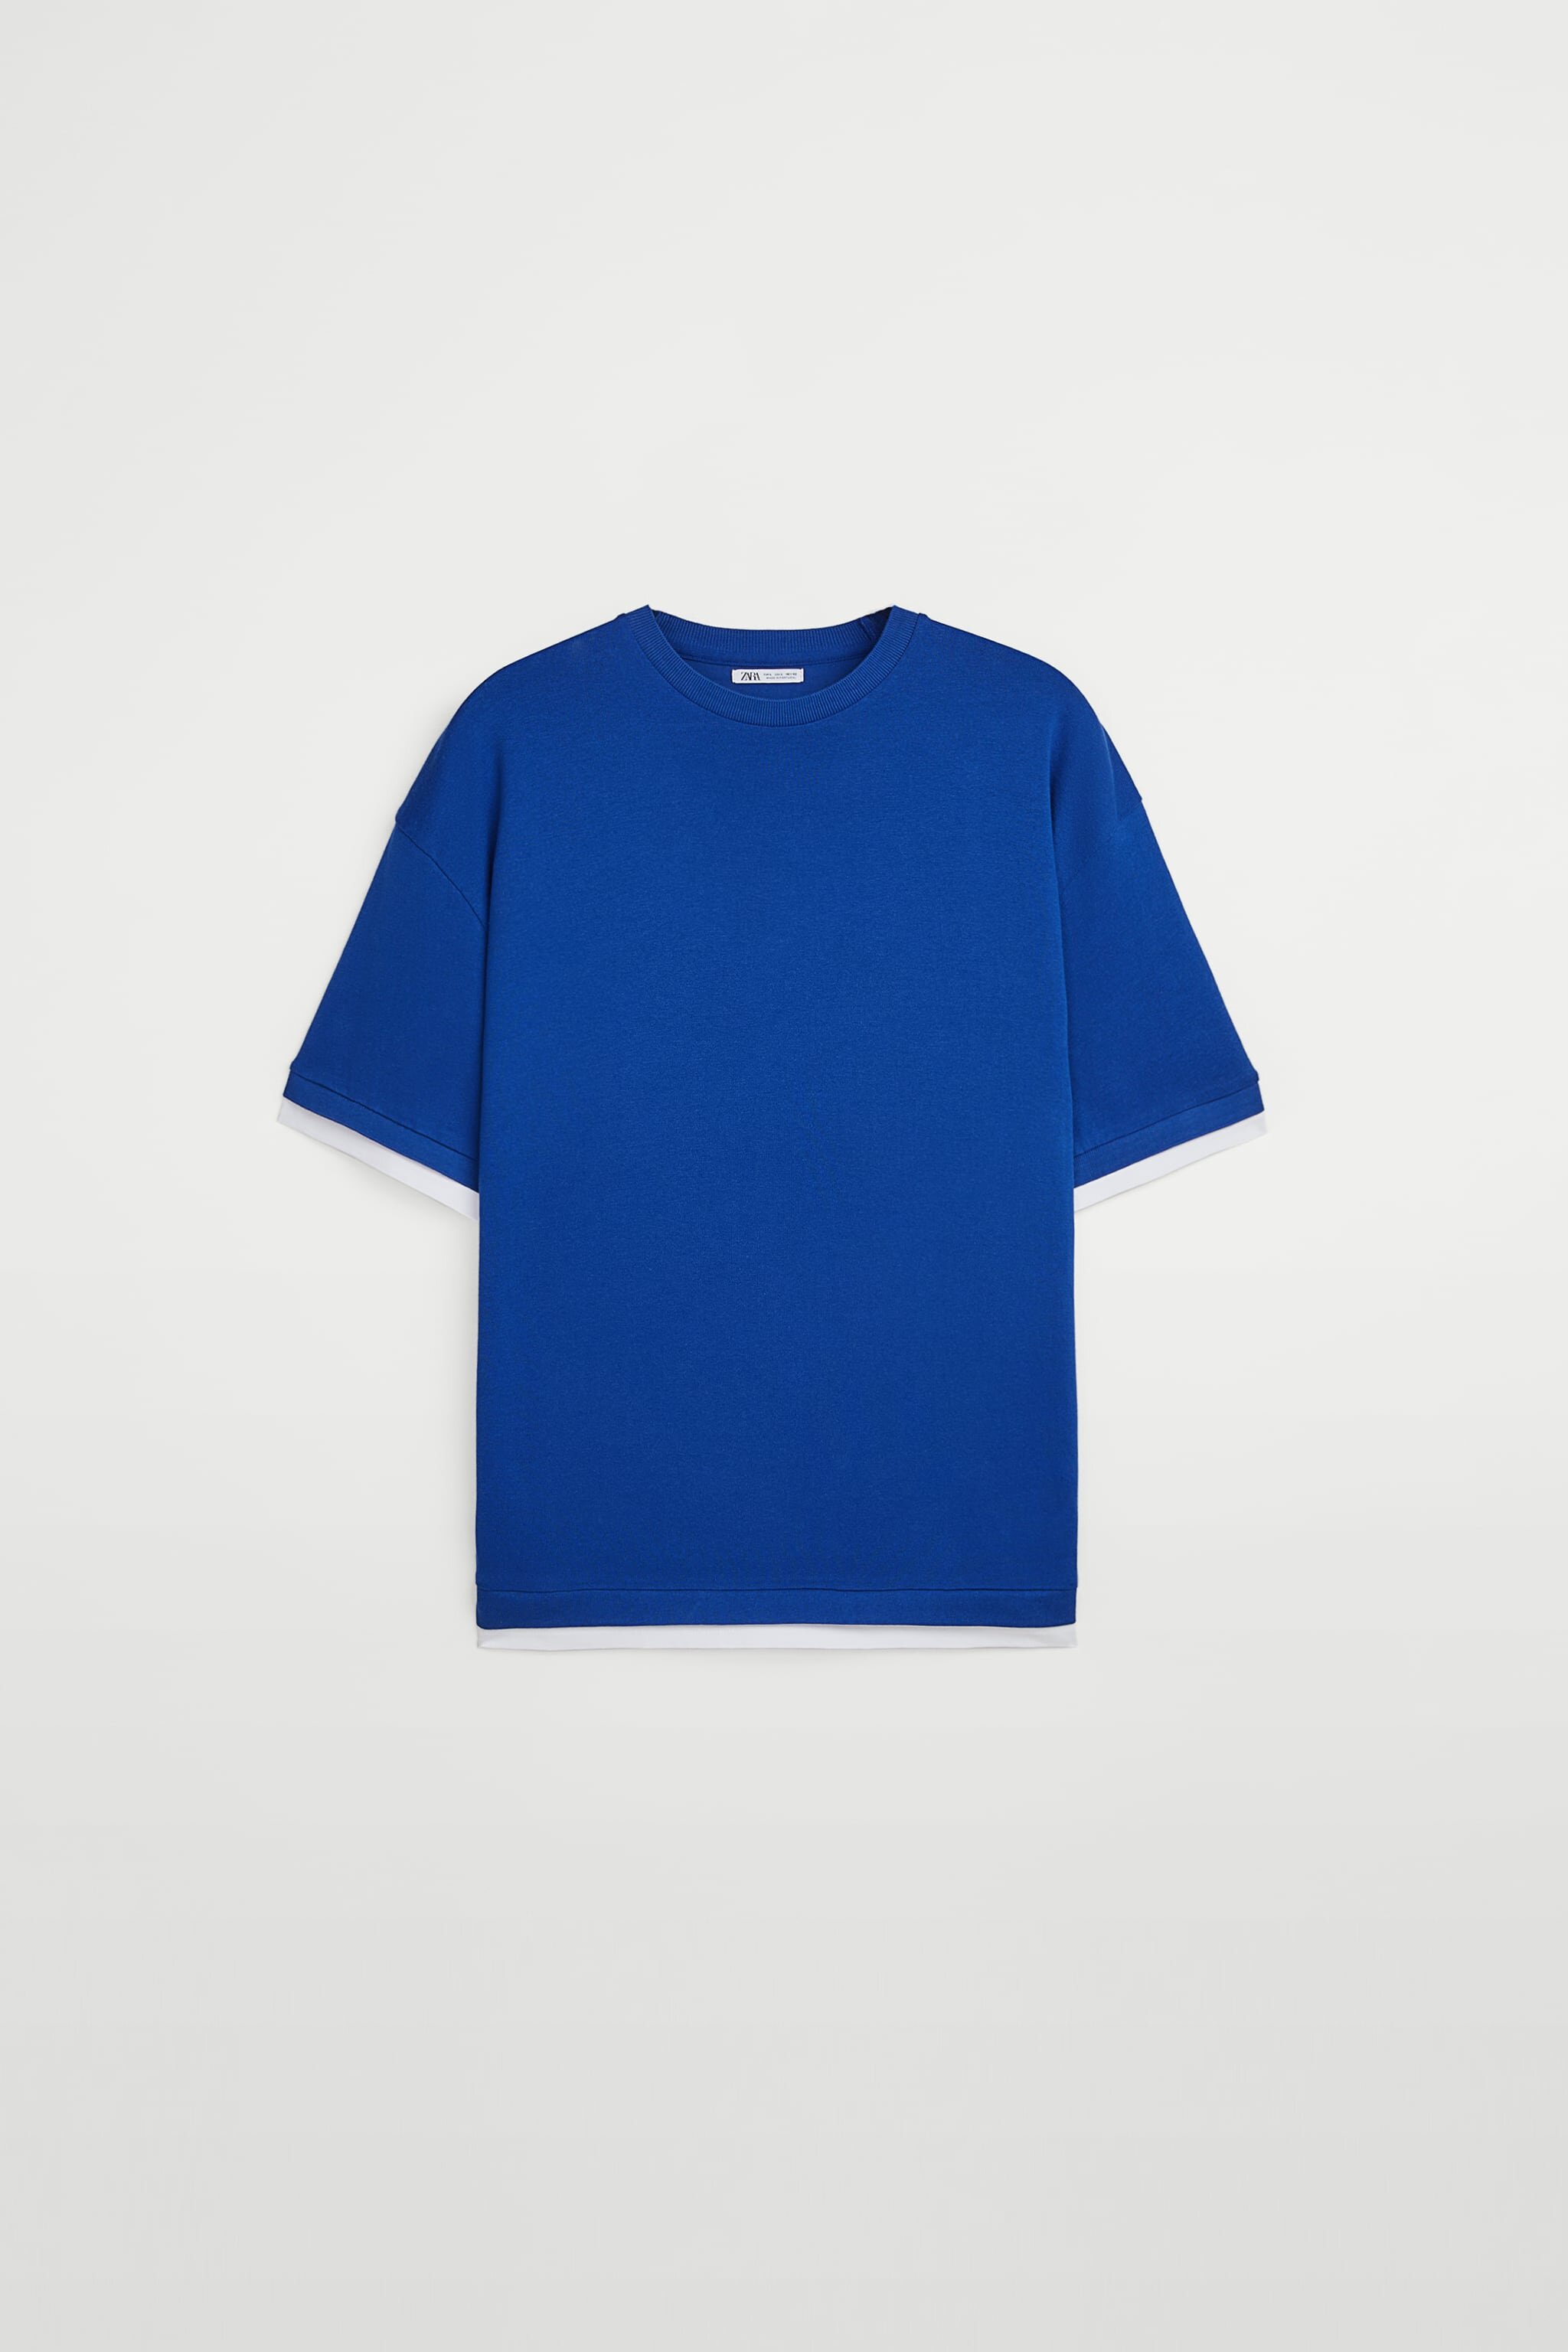 Contrast Trim Knit T-Shirt, ₱1,295